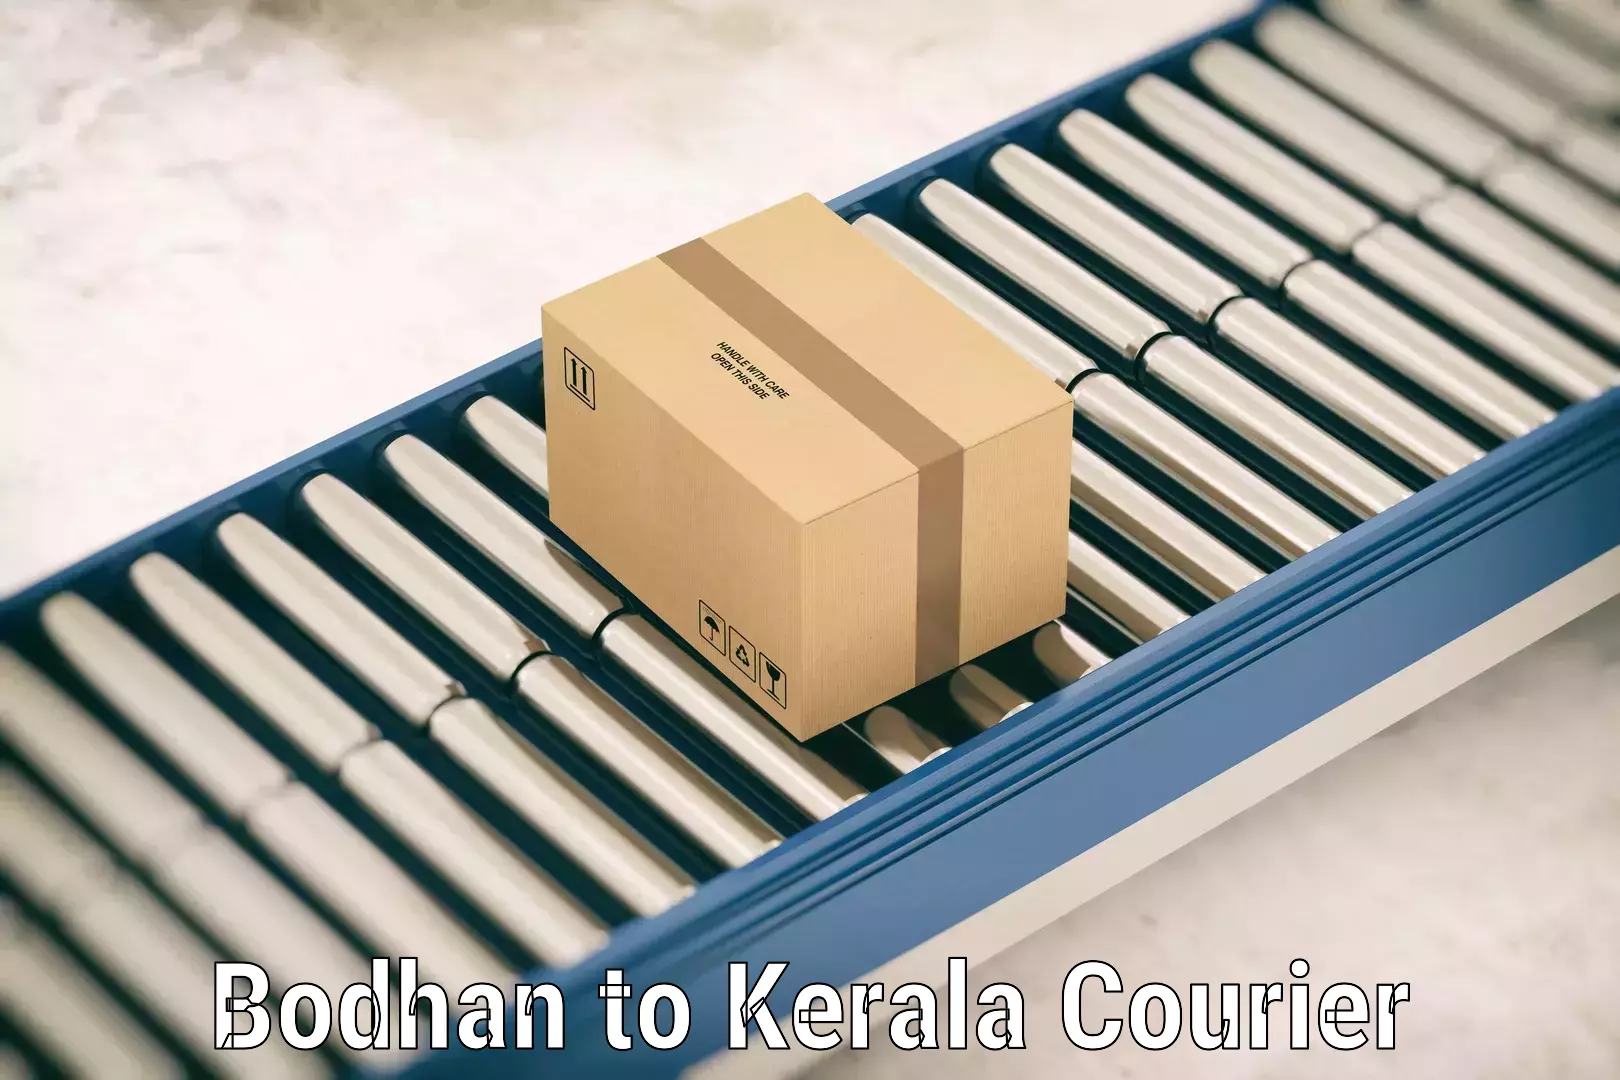 Luggage transport consultancy Bodhan to Kerala